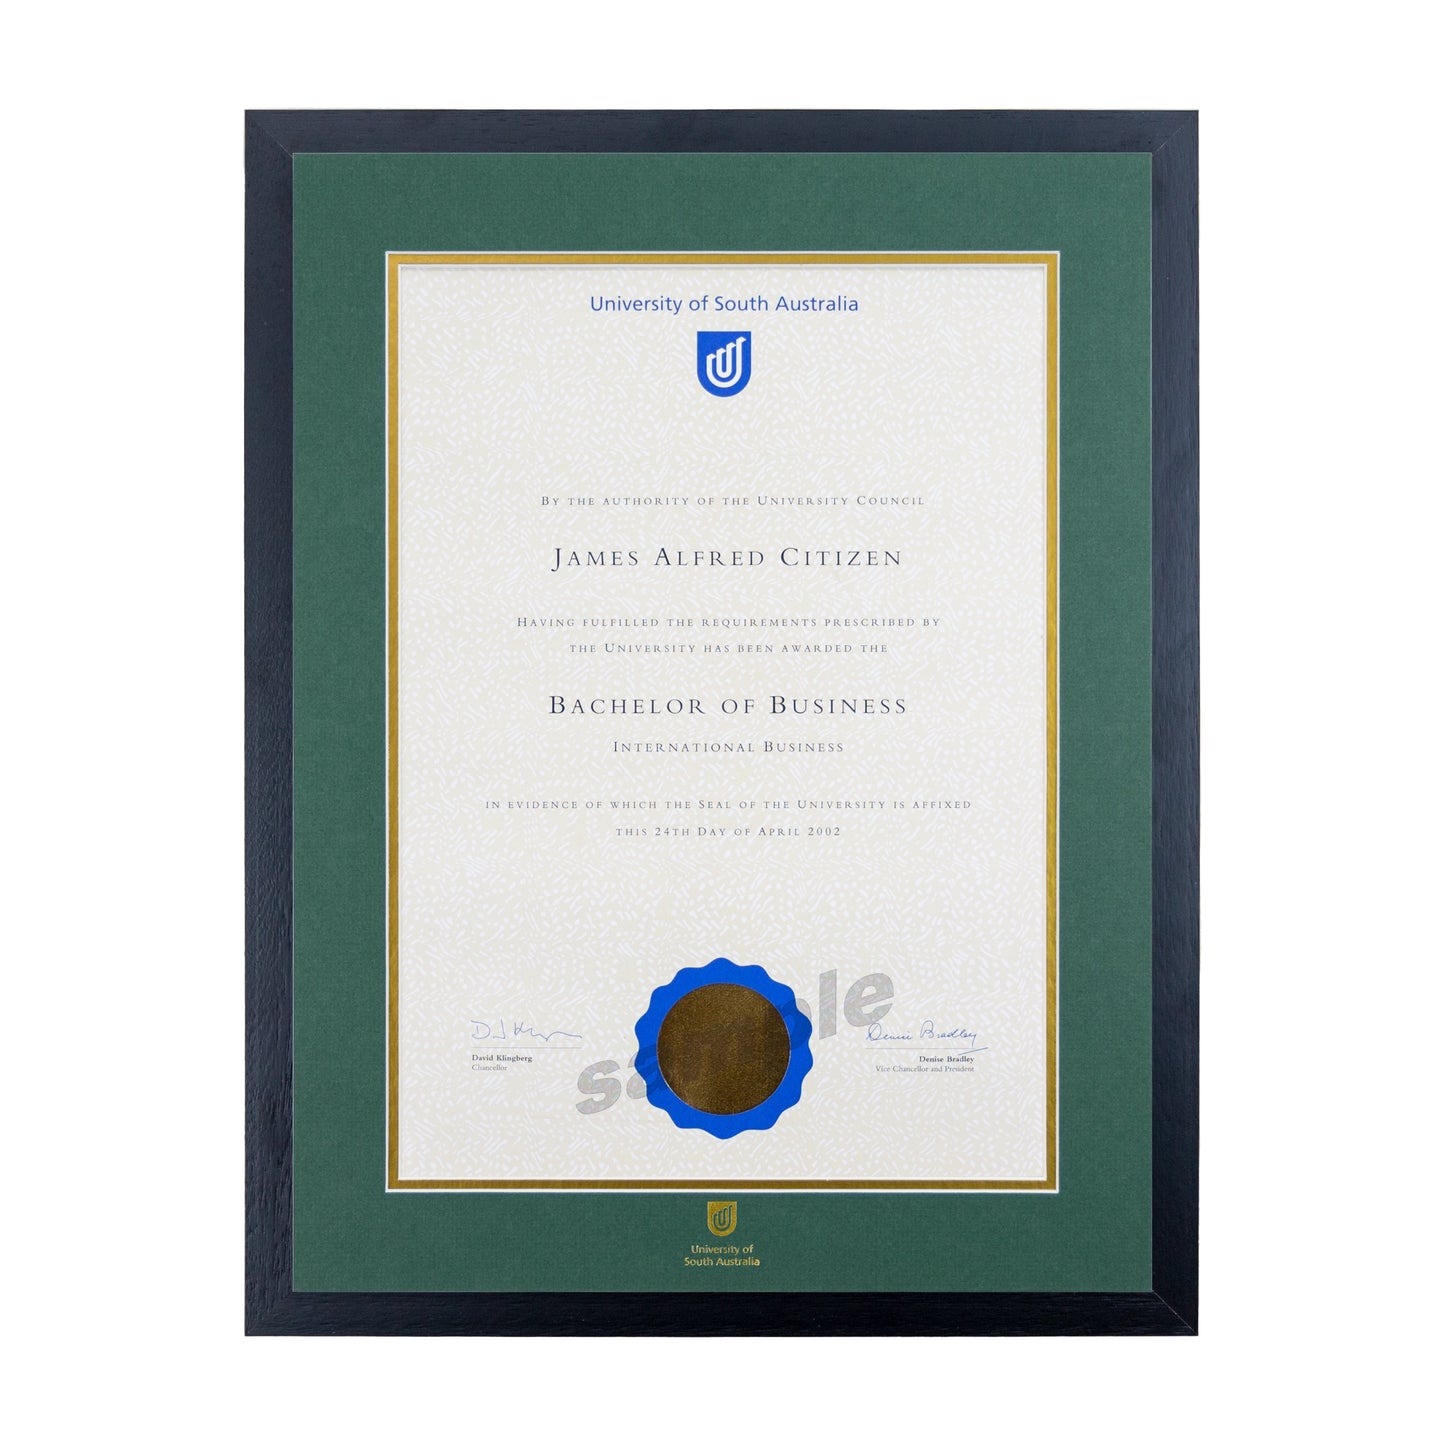 University of South Australia Single Certificate Frame - Standard Black